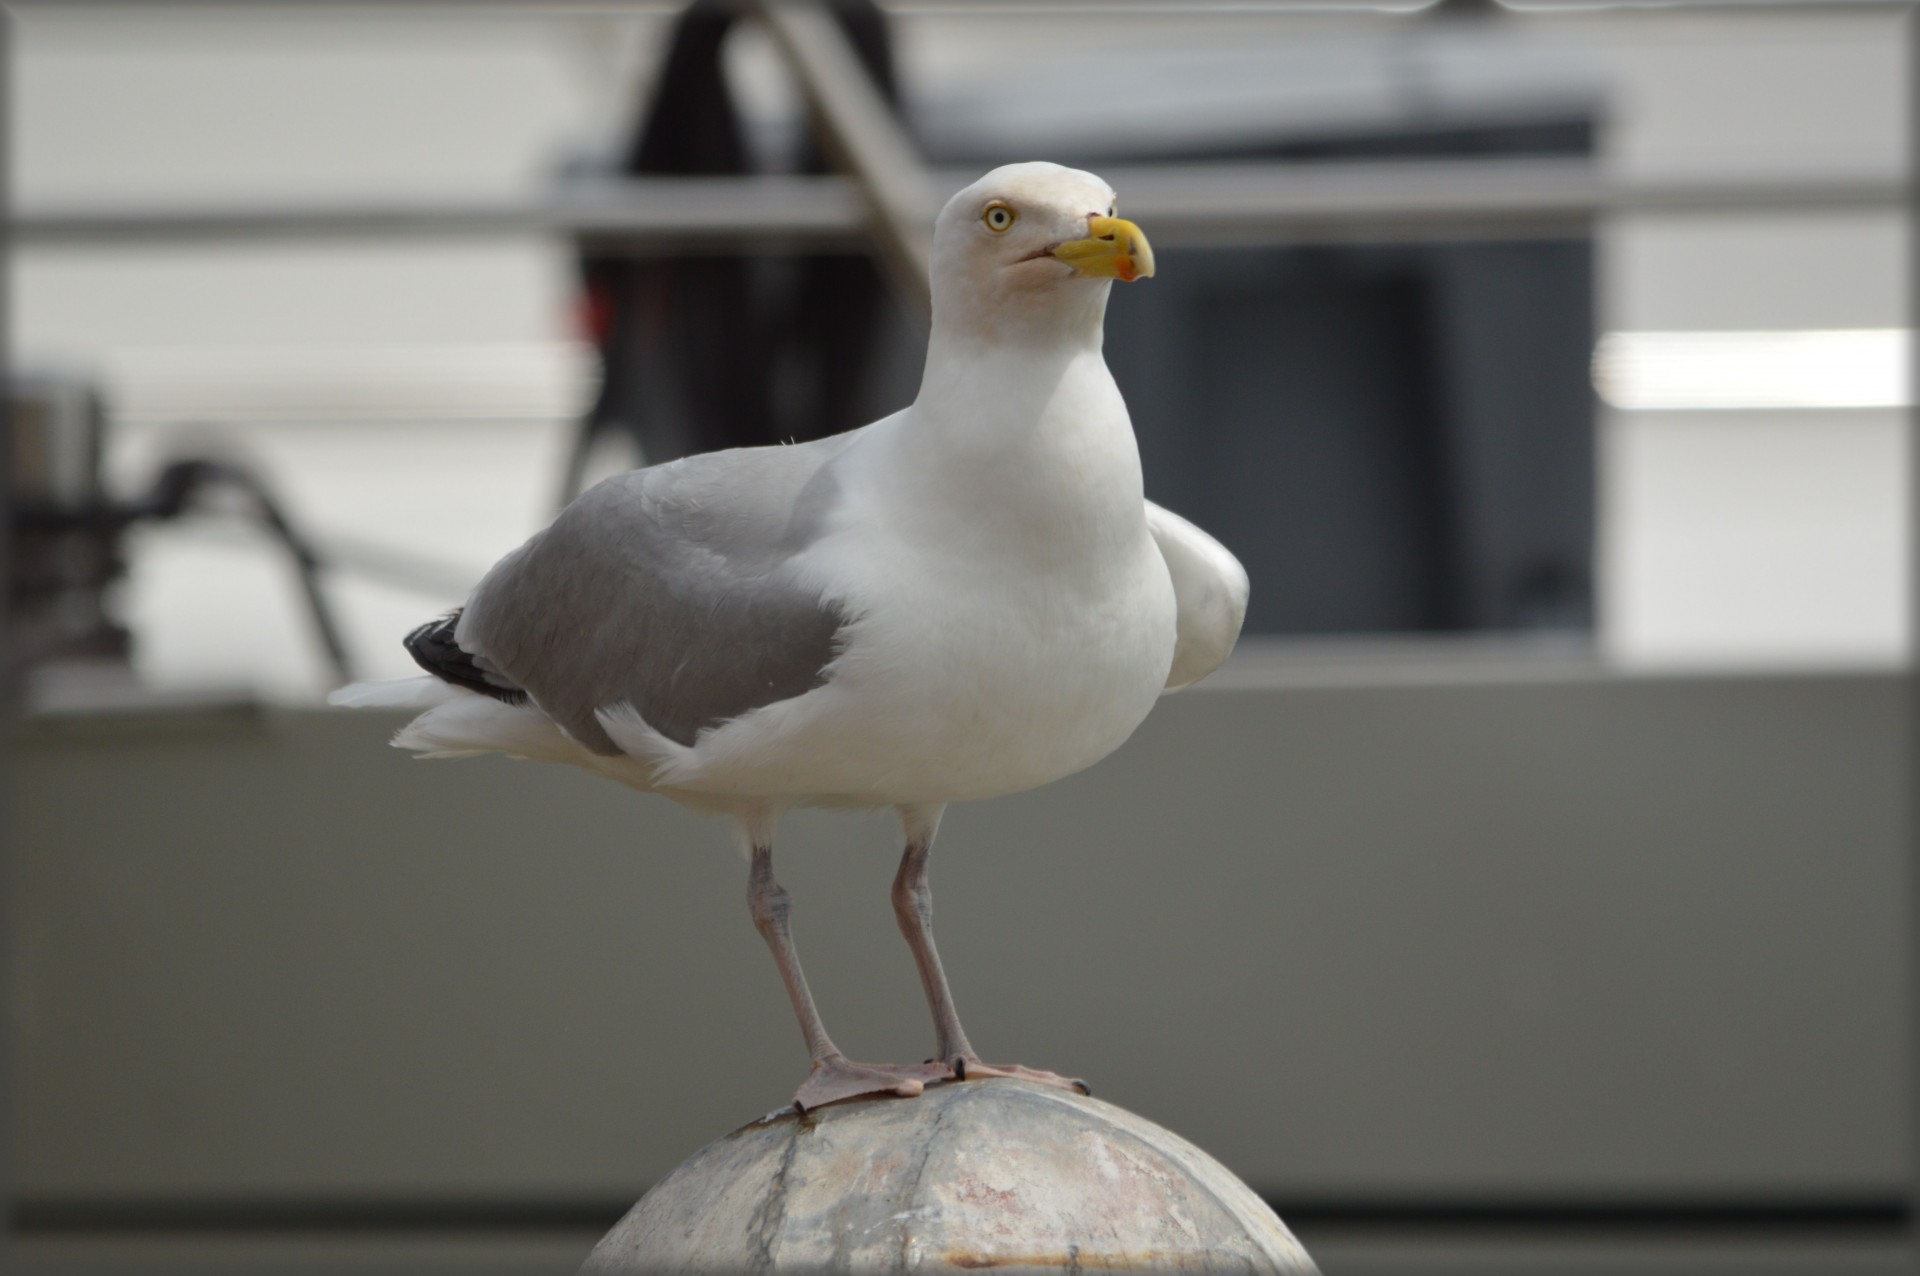 Seagull 2